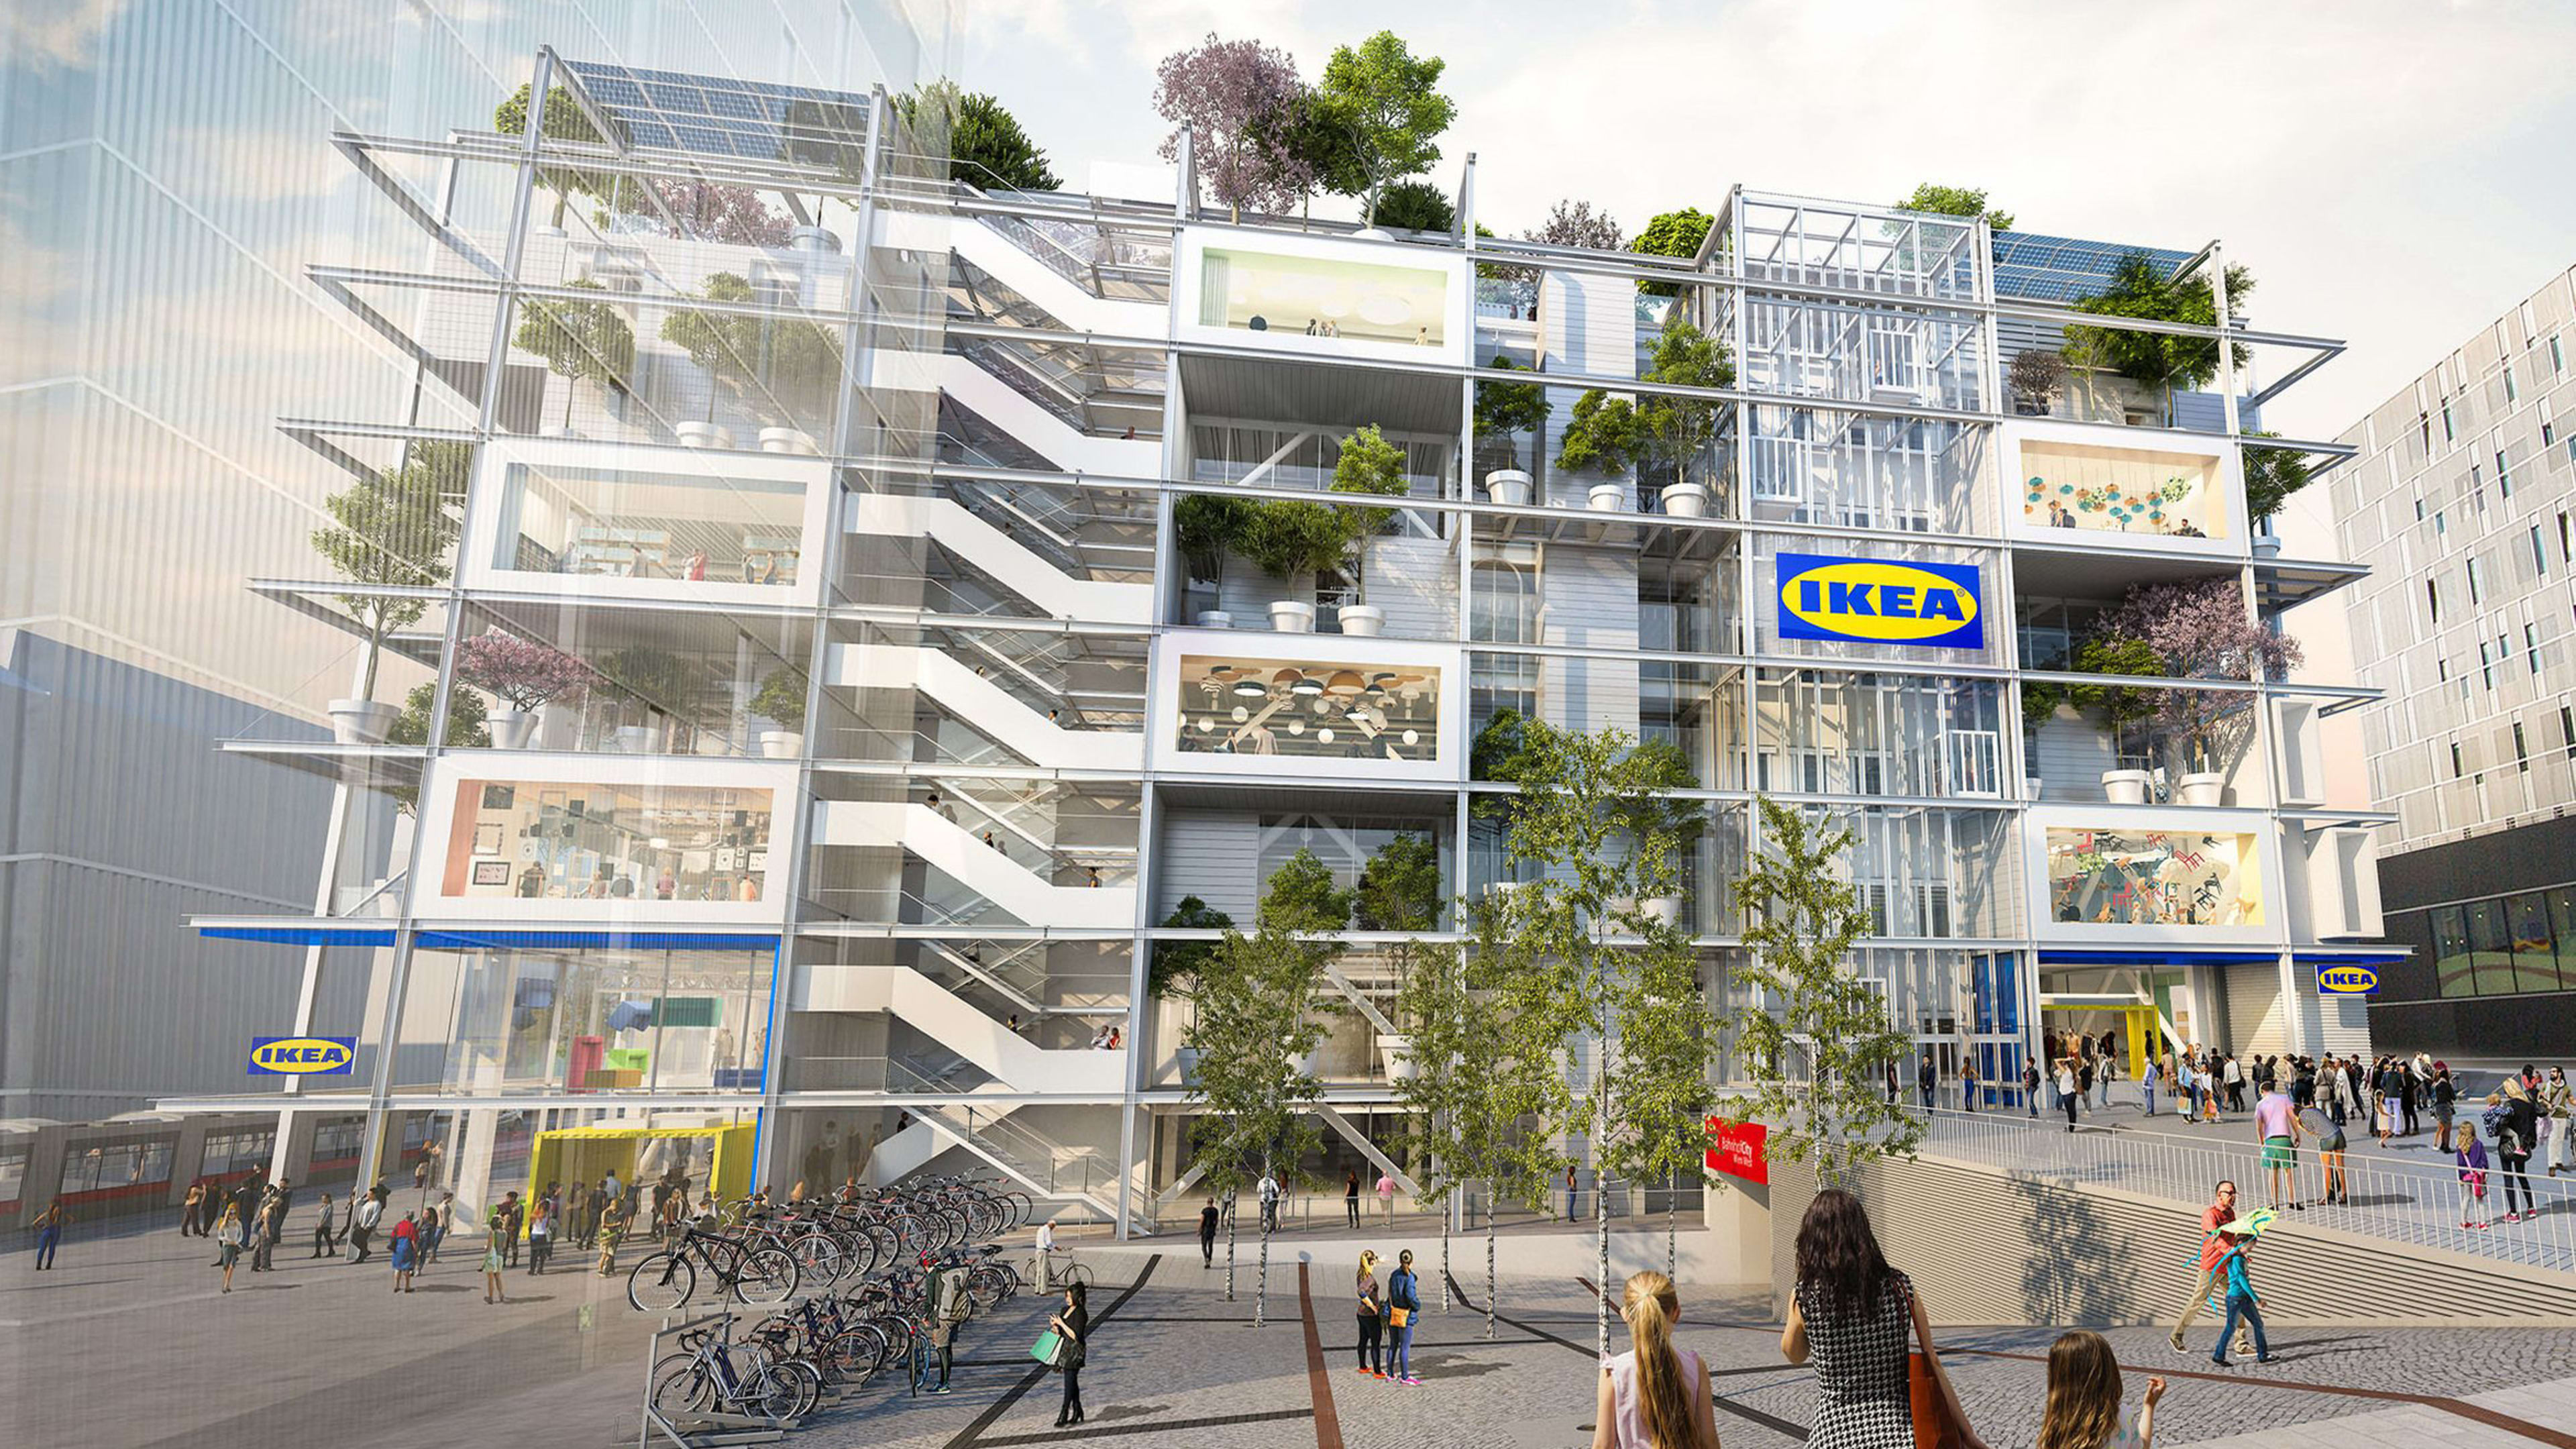 This new Ikea store has zero parking spaces